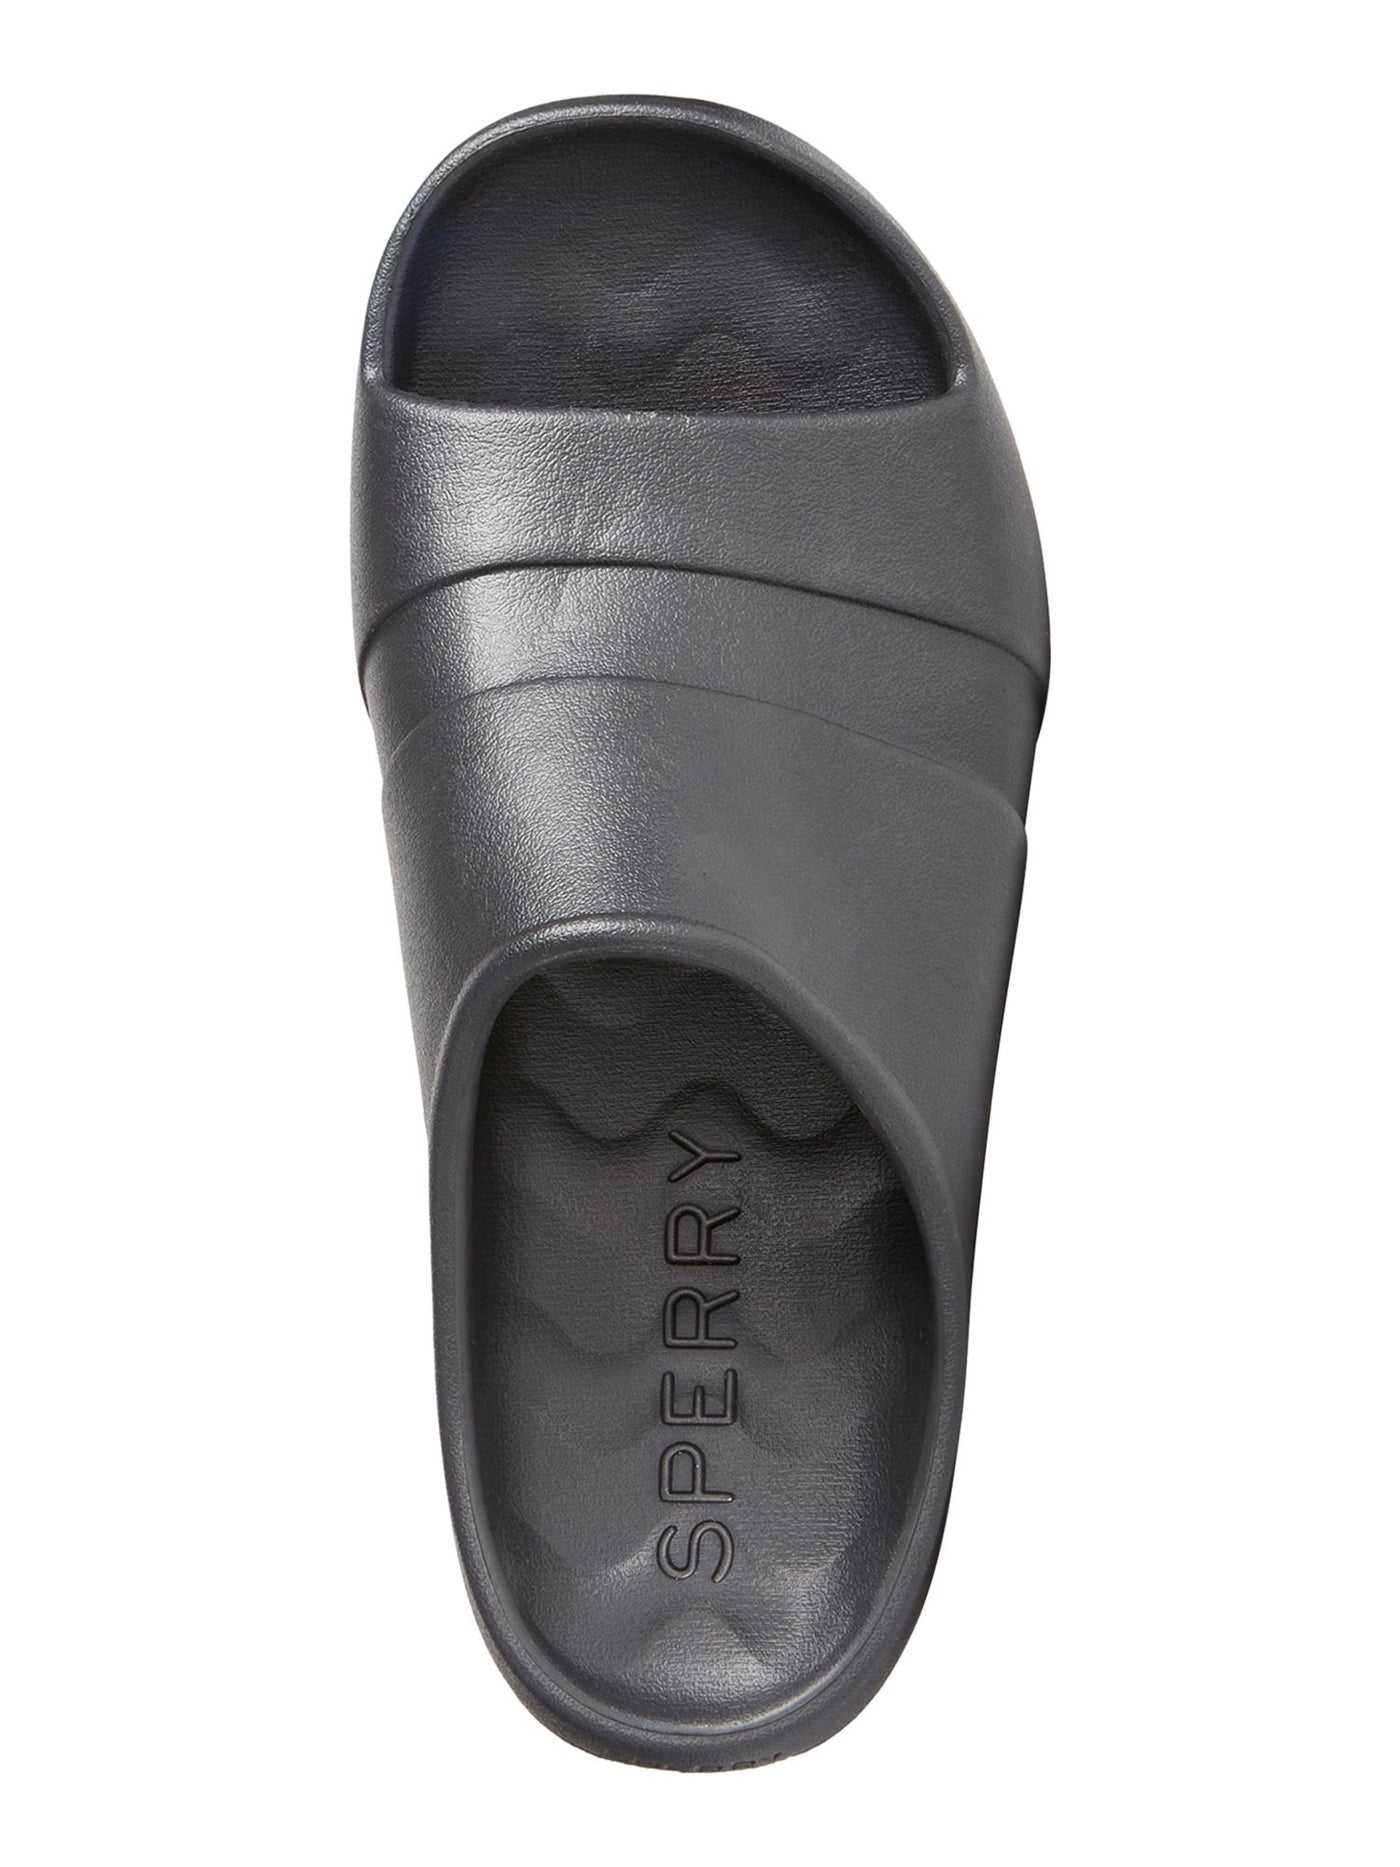 SPERRY Mens Black Padded Float Round Toe Slip On Slide Sandals Shoes 9 M